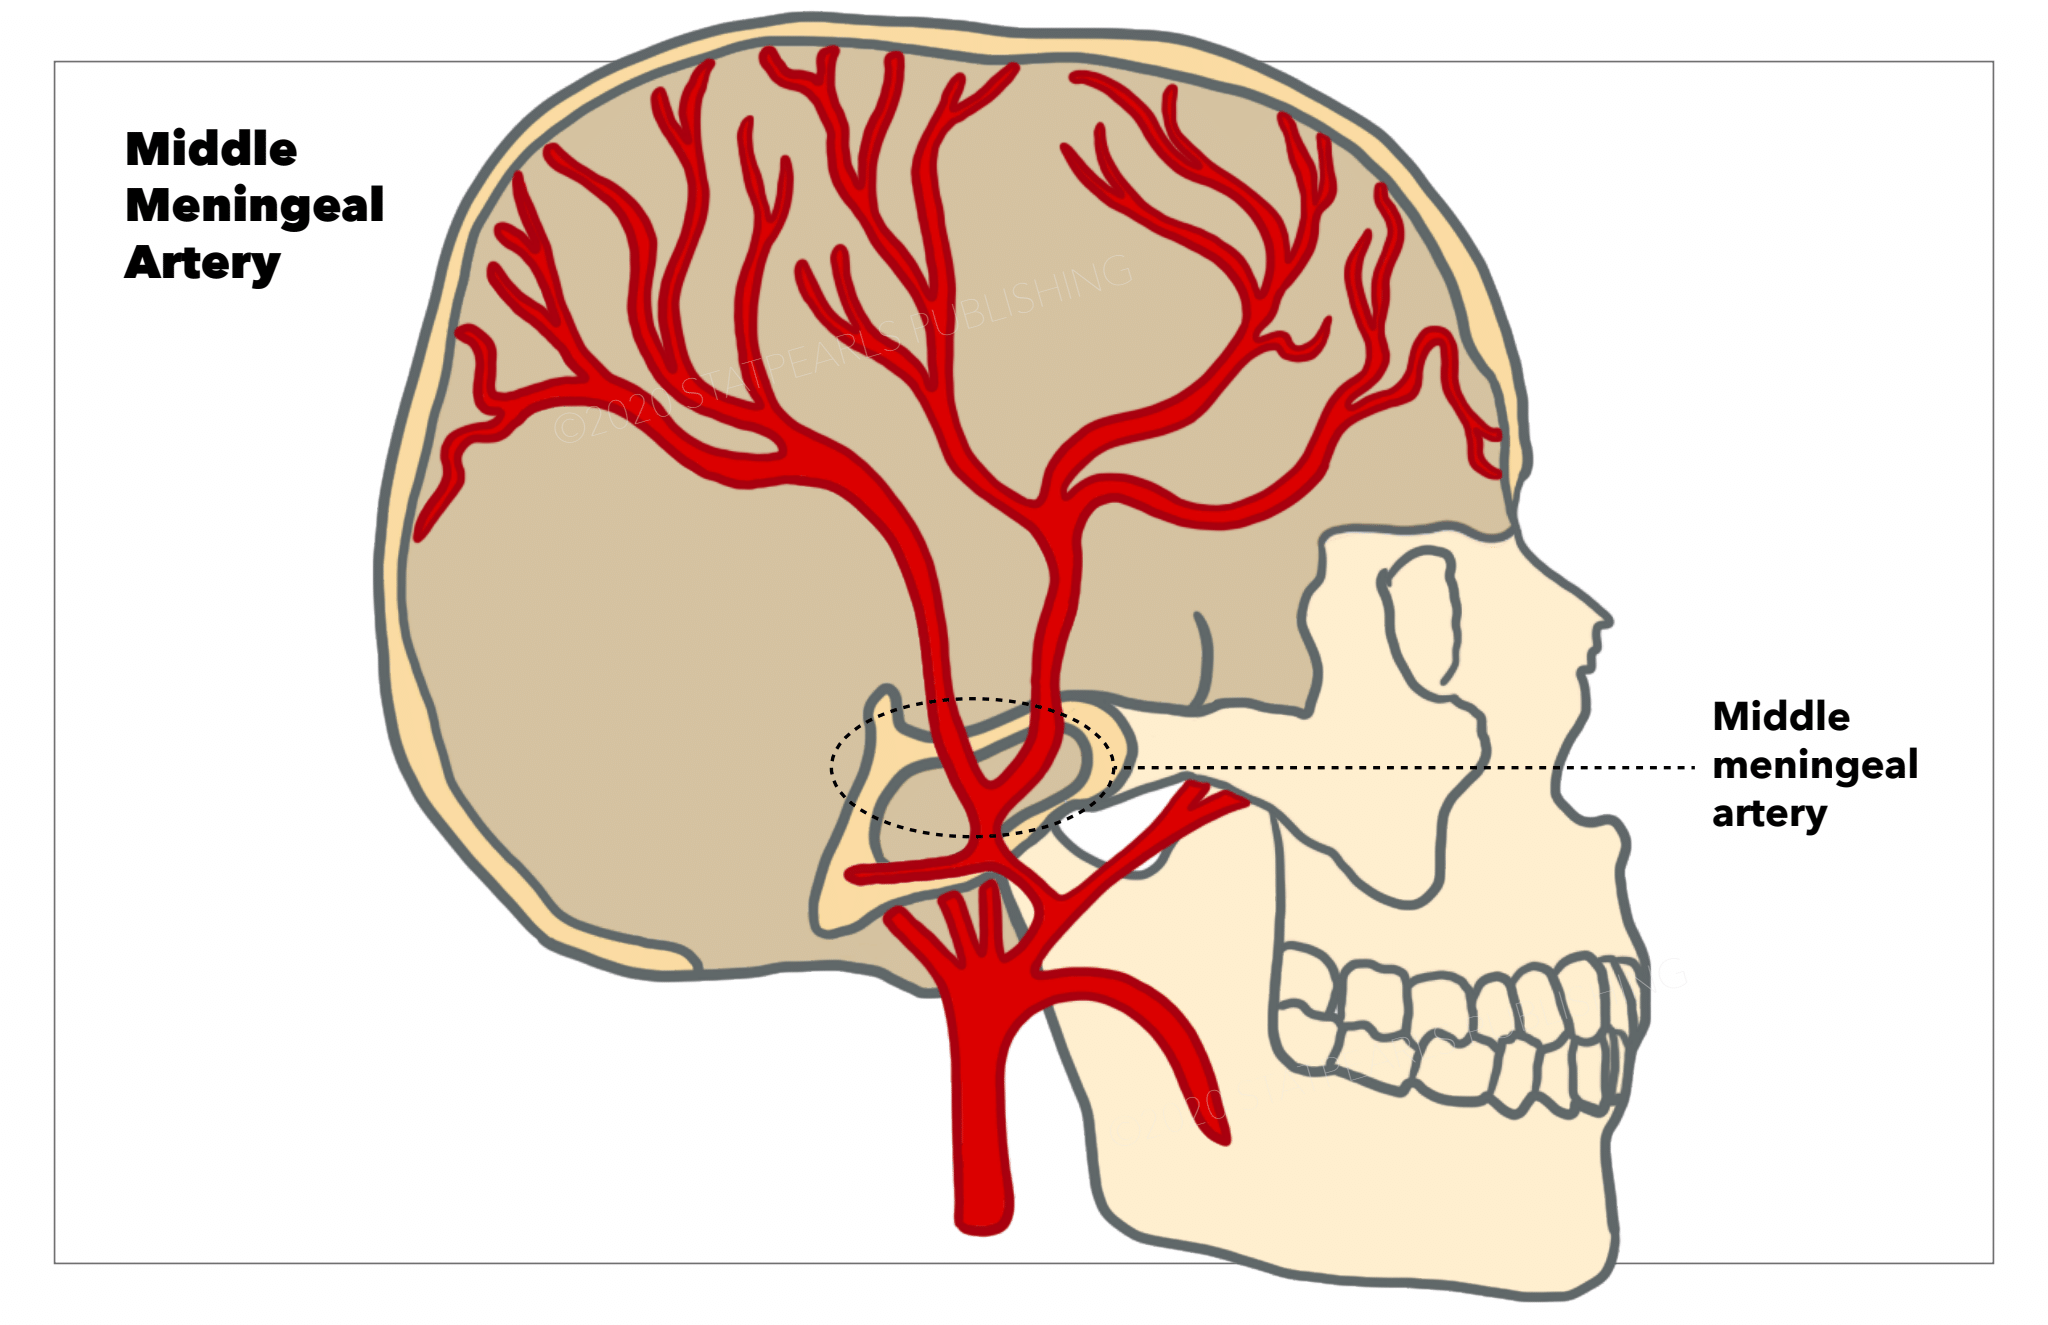 Middle Meningeal Artery